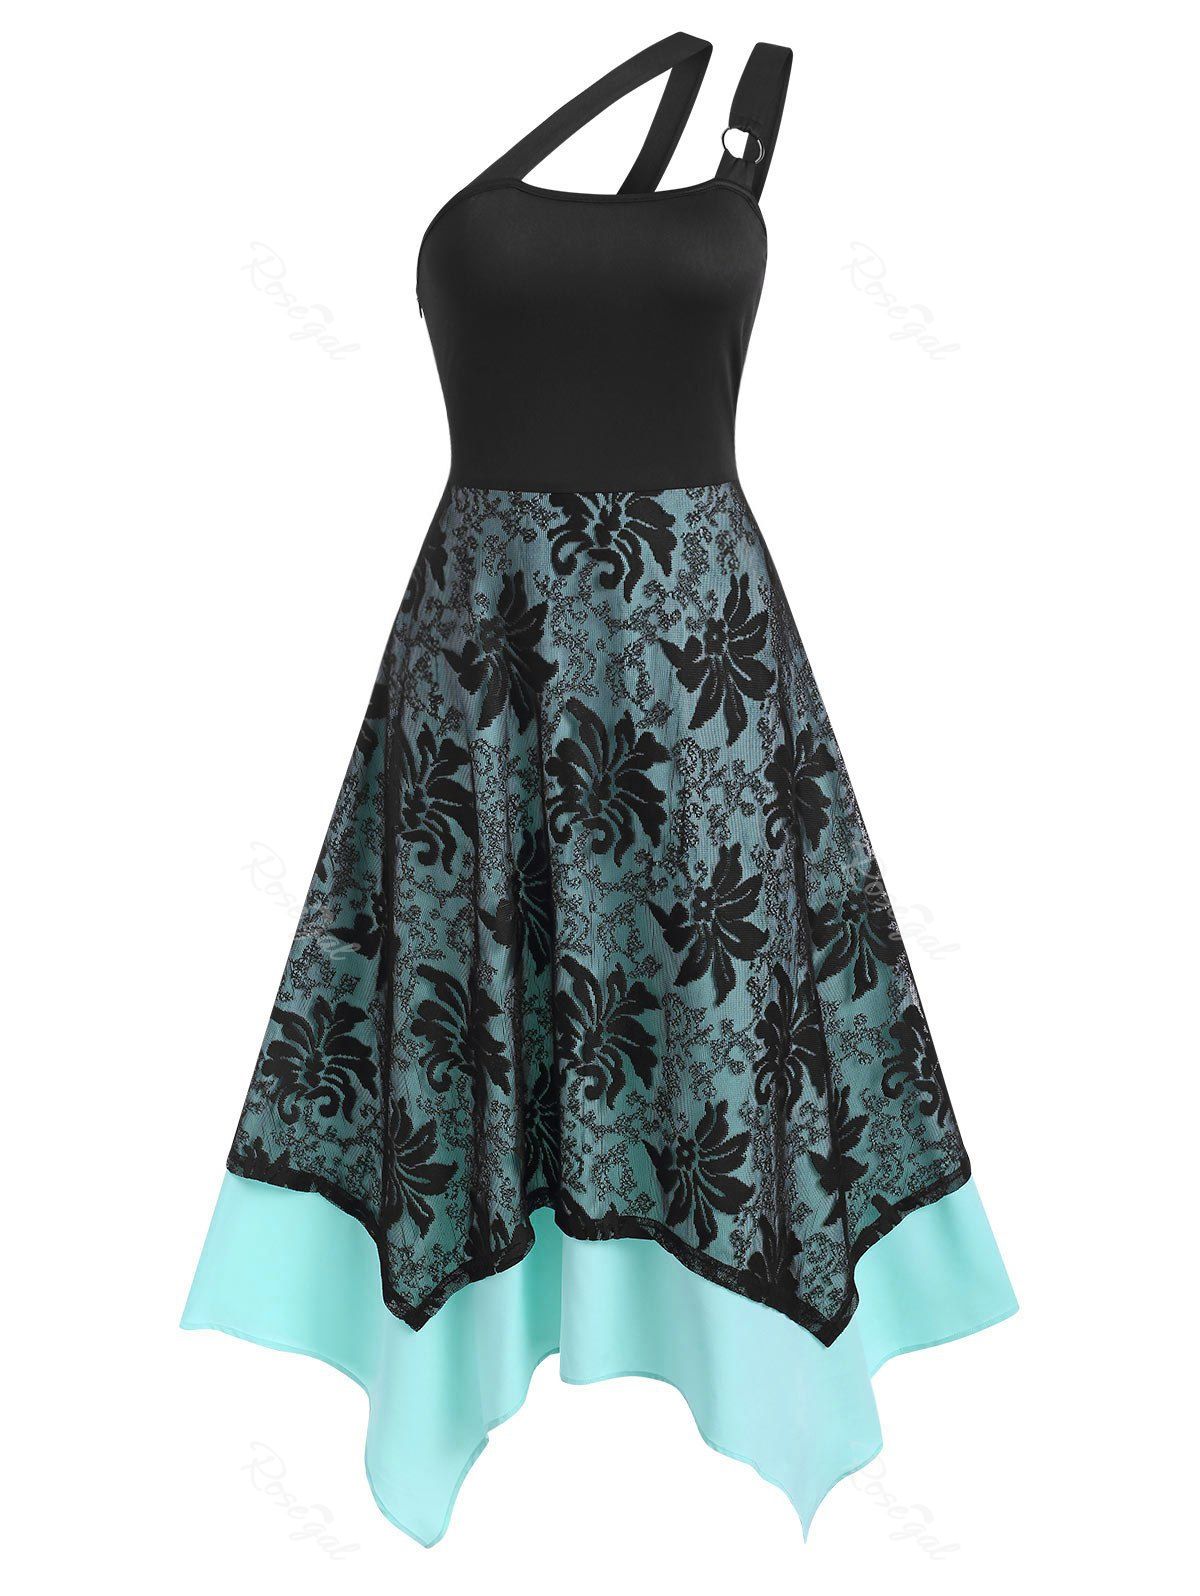 Shops O-ring High Waist Layered Lace Cami Dress  